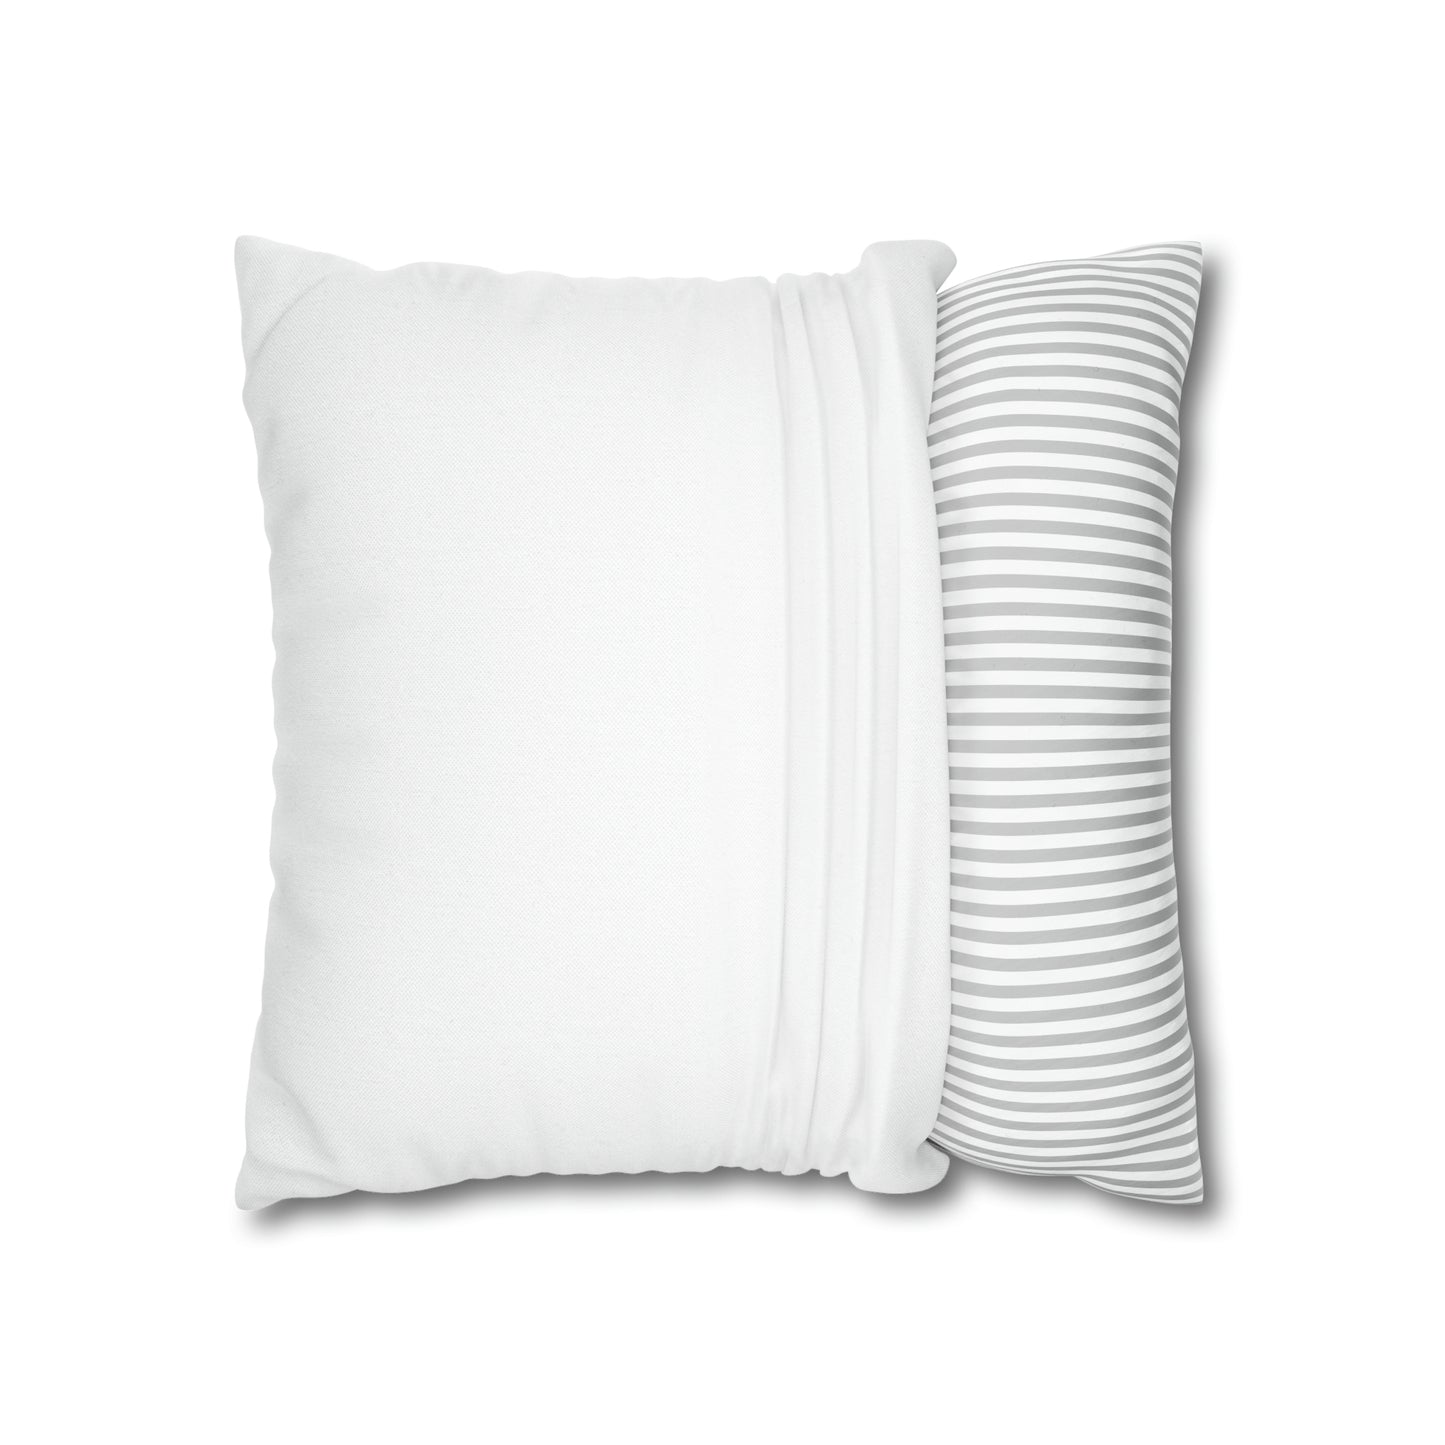 USA Spun Polyester Square Pillow Case